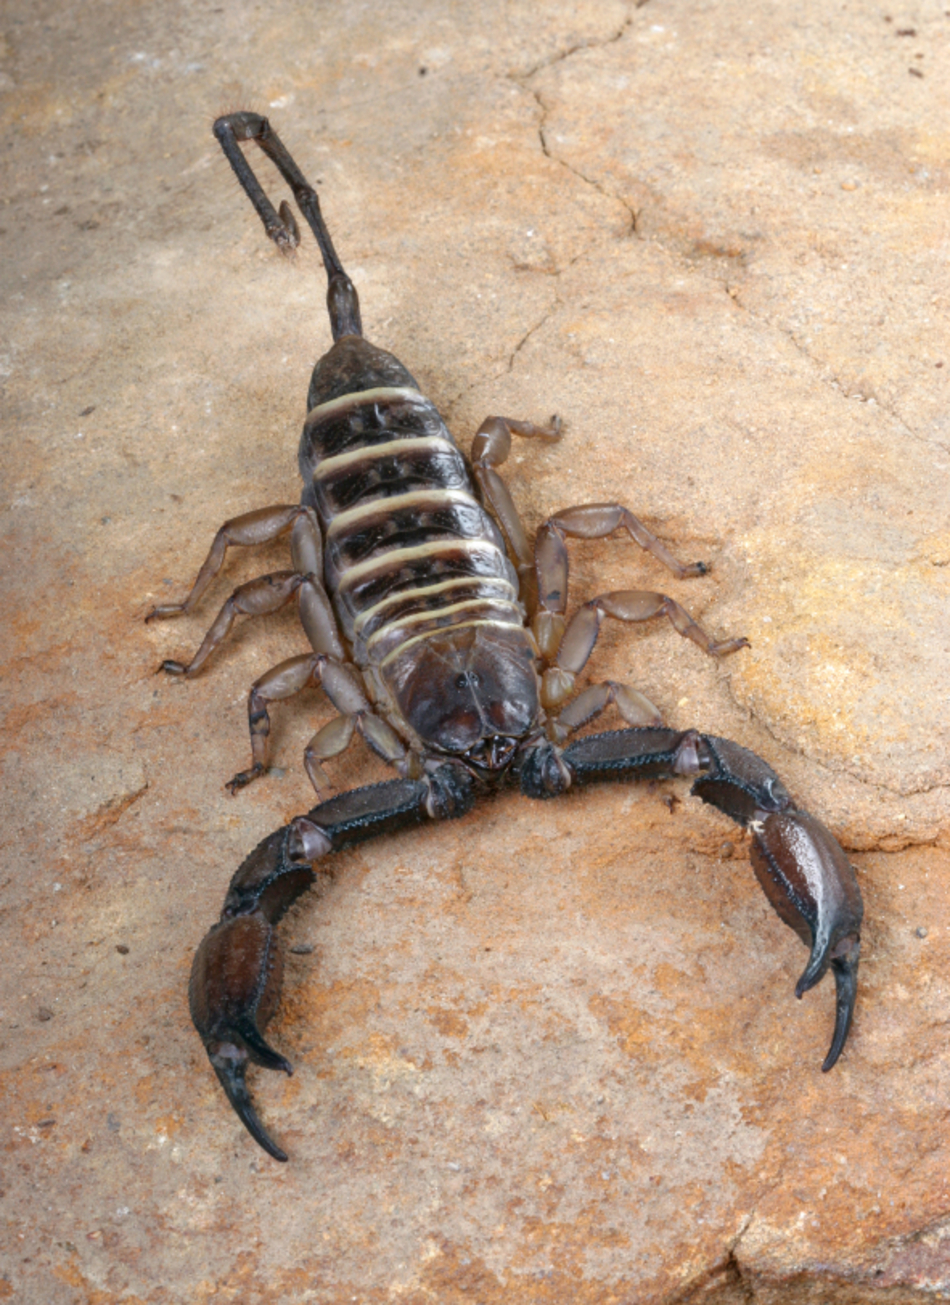 I Think I Got Stung By a Scorpion—What Should I Do?